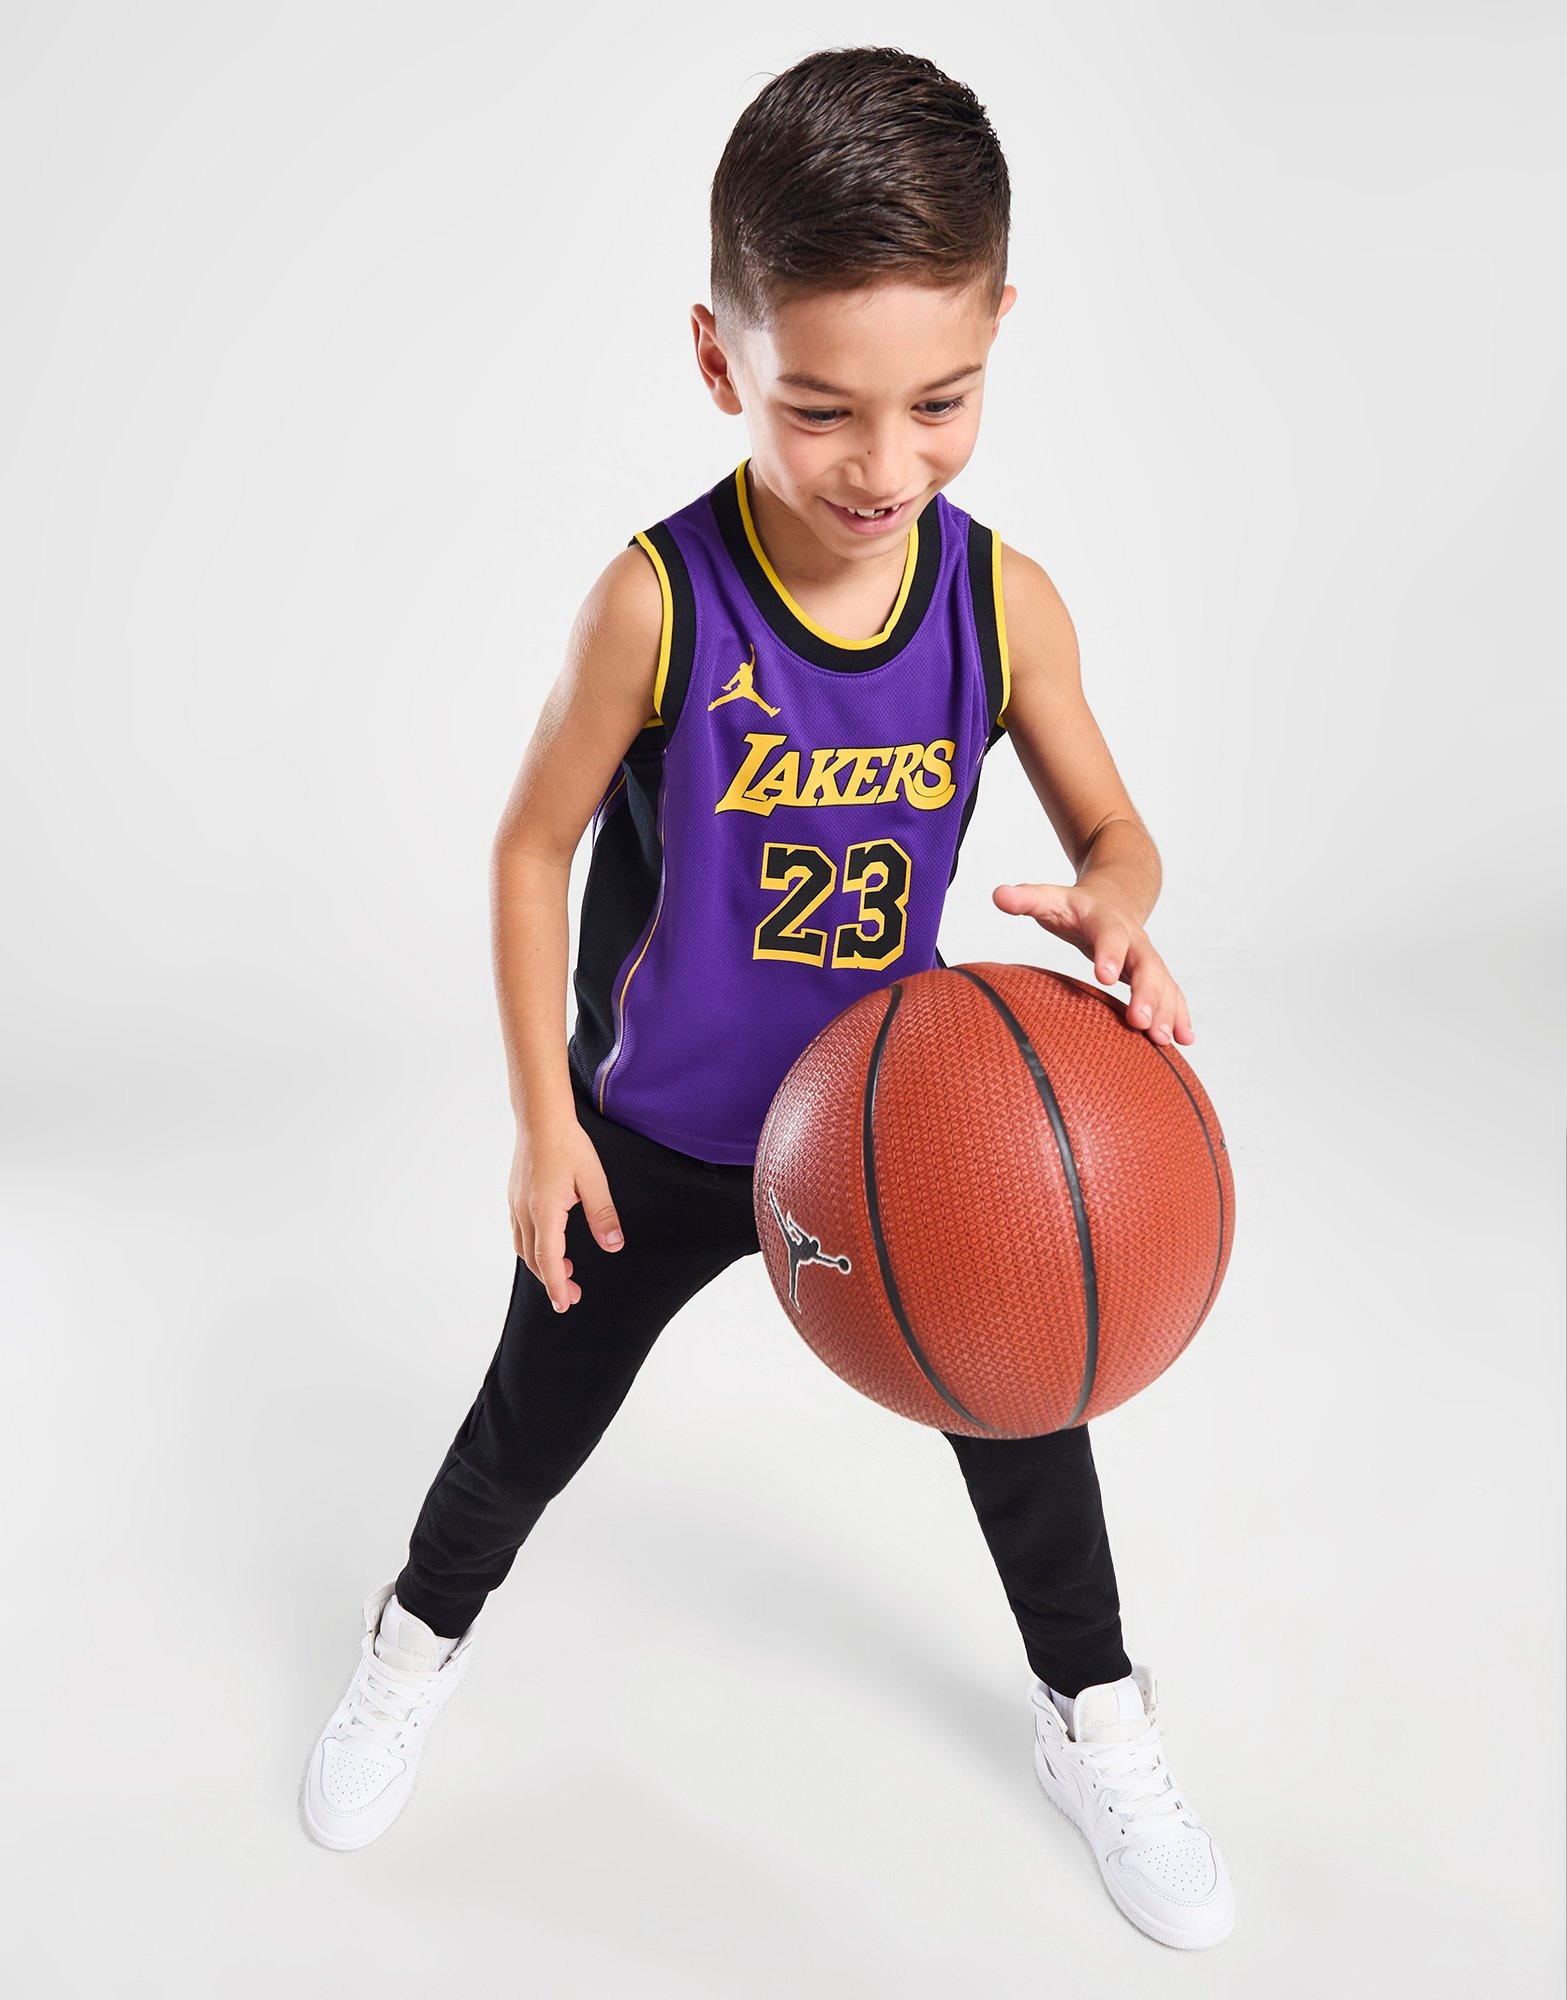 Los Angeles Lakers Lebron James Kids Lrg Top Jersey Purple Gold